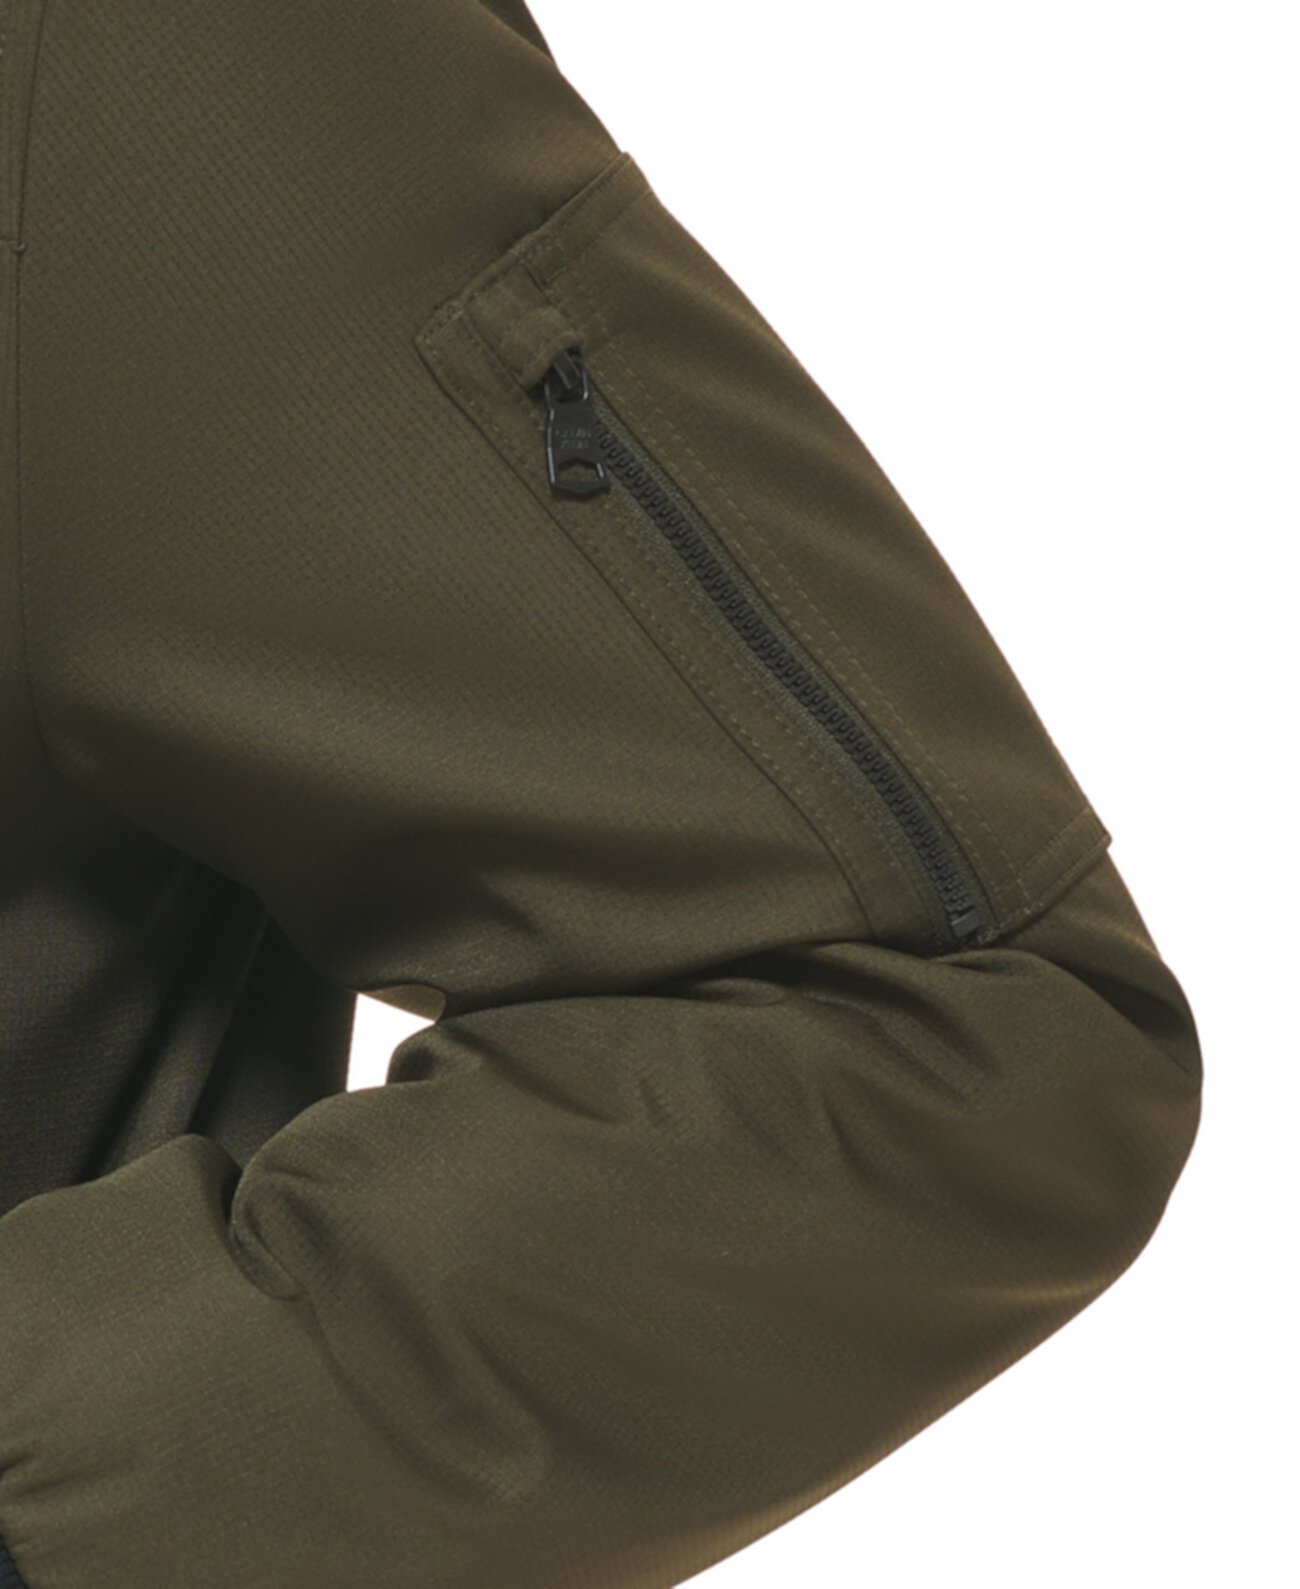 Мужская куртка-бомбер из рипстопа Calvin Klein